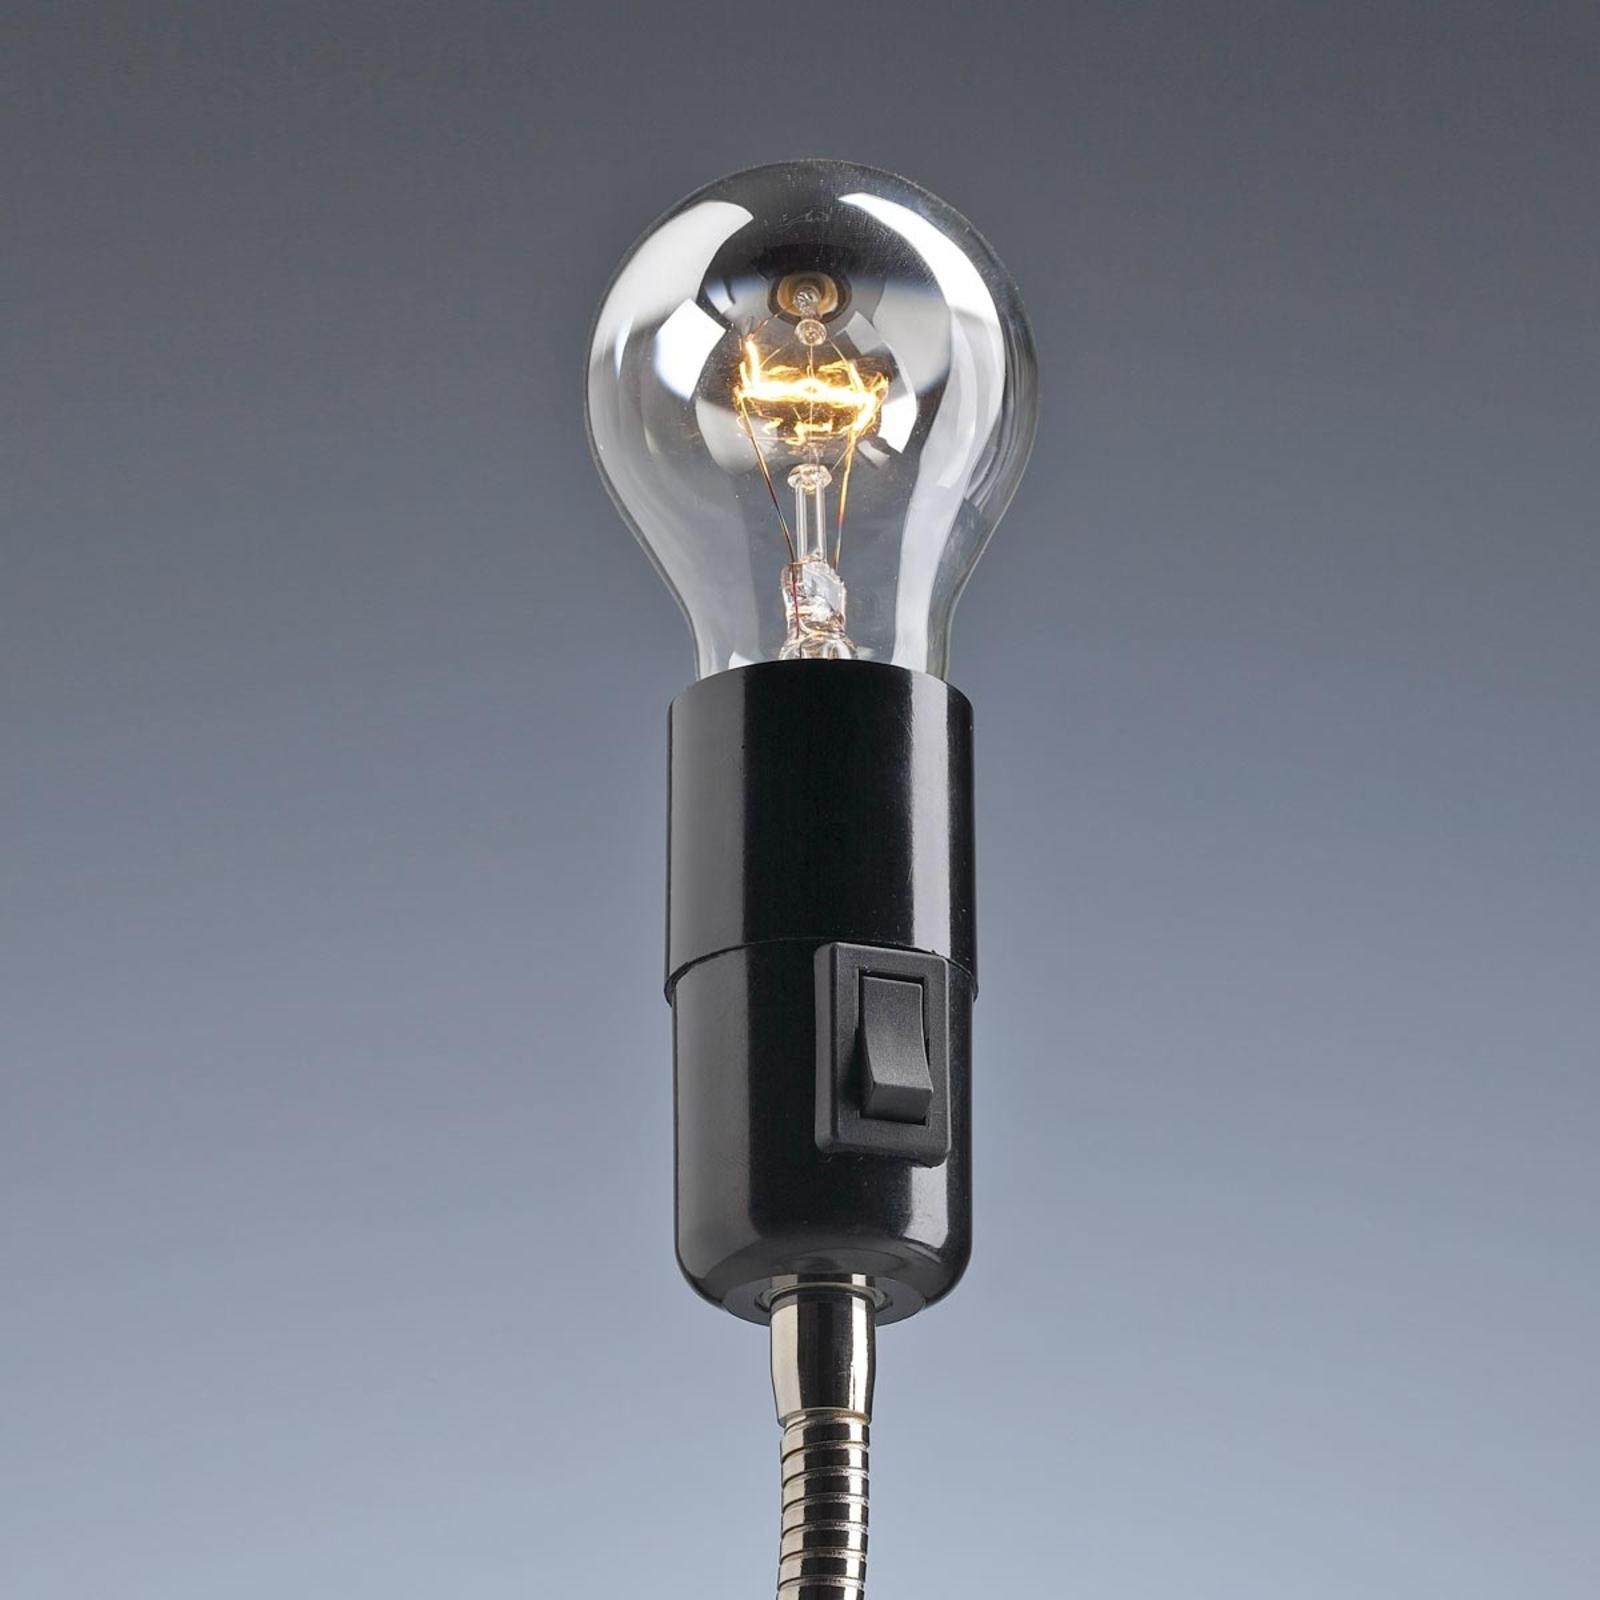 TECNOLUMEN Lightworm lampe à poser, nickelée